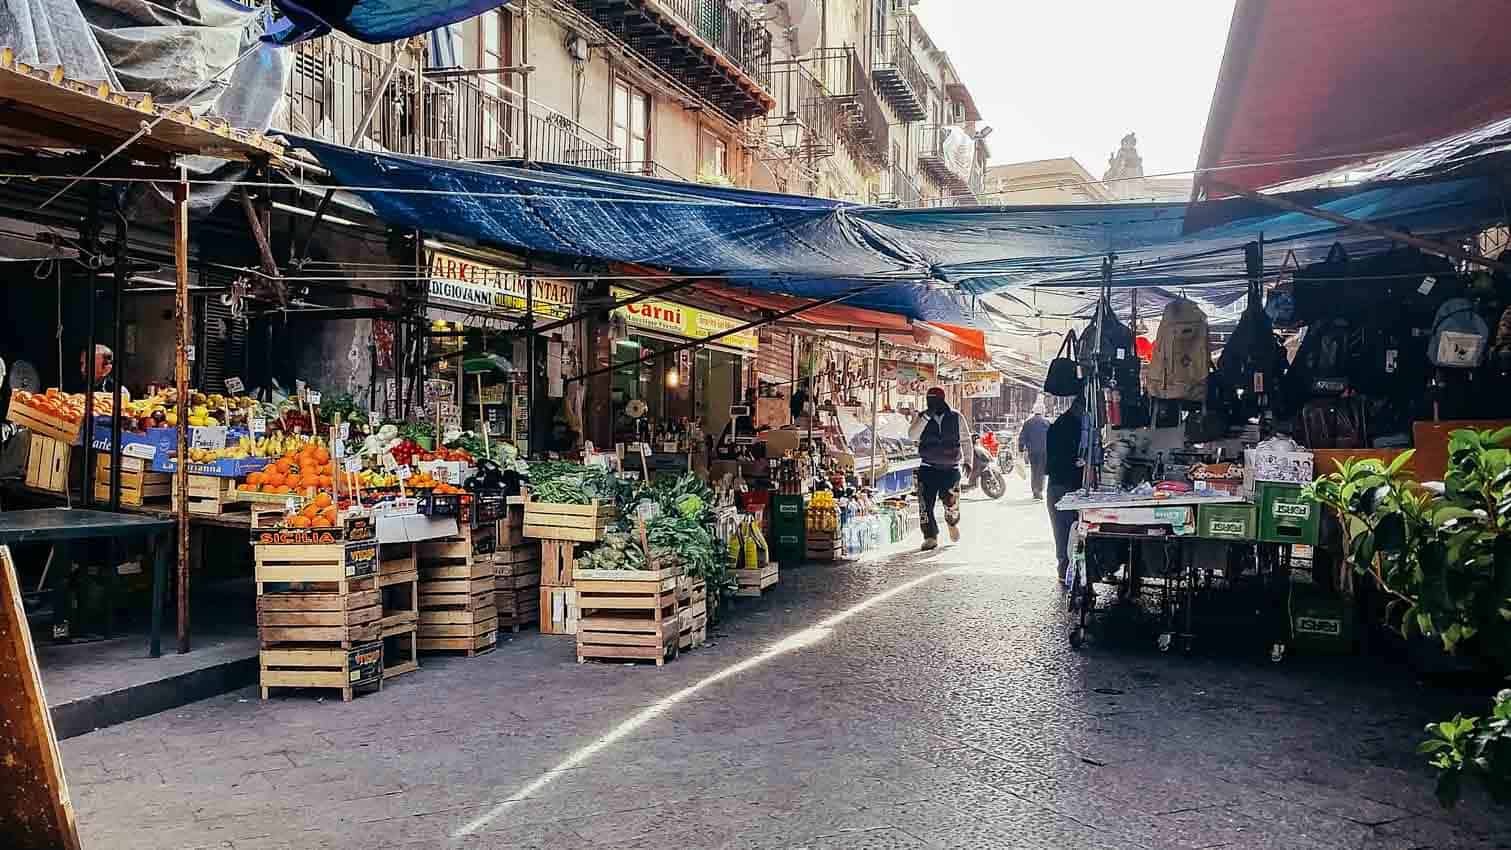 Trip to Sicily: Ballarò market in Palermo | Very EATalian